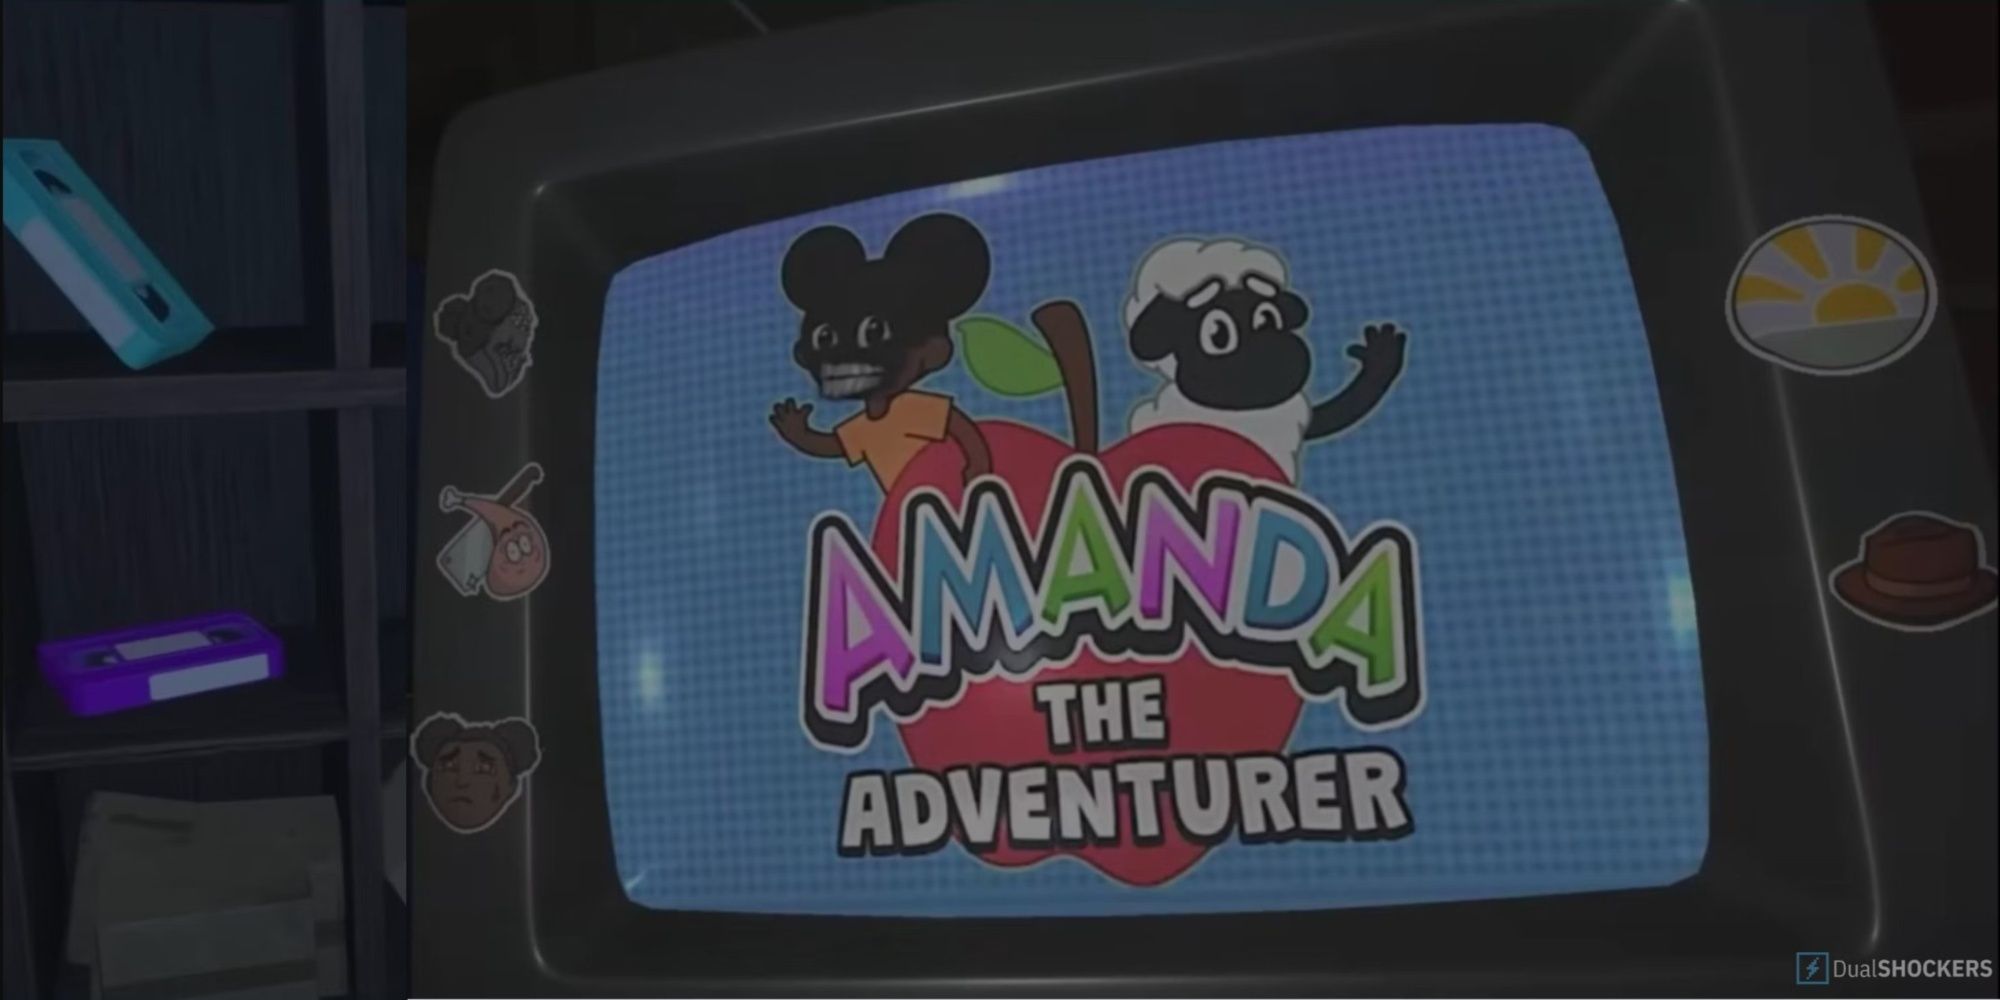 A full Amanda the Adventurer game is coming in 2023! - Amanda the